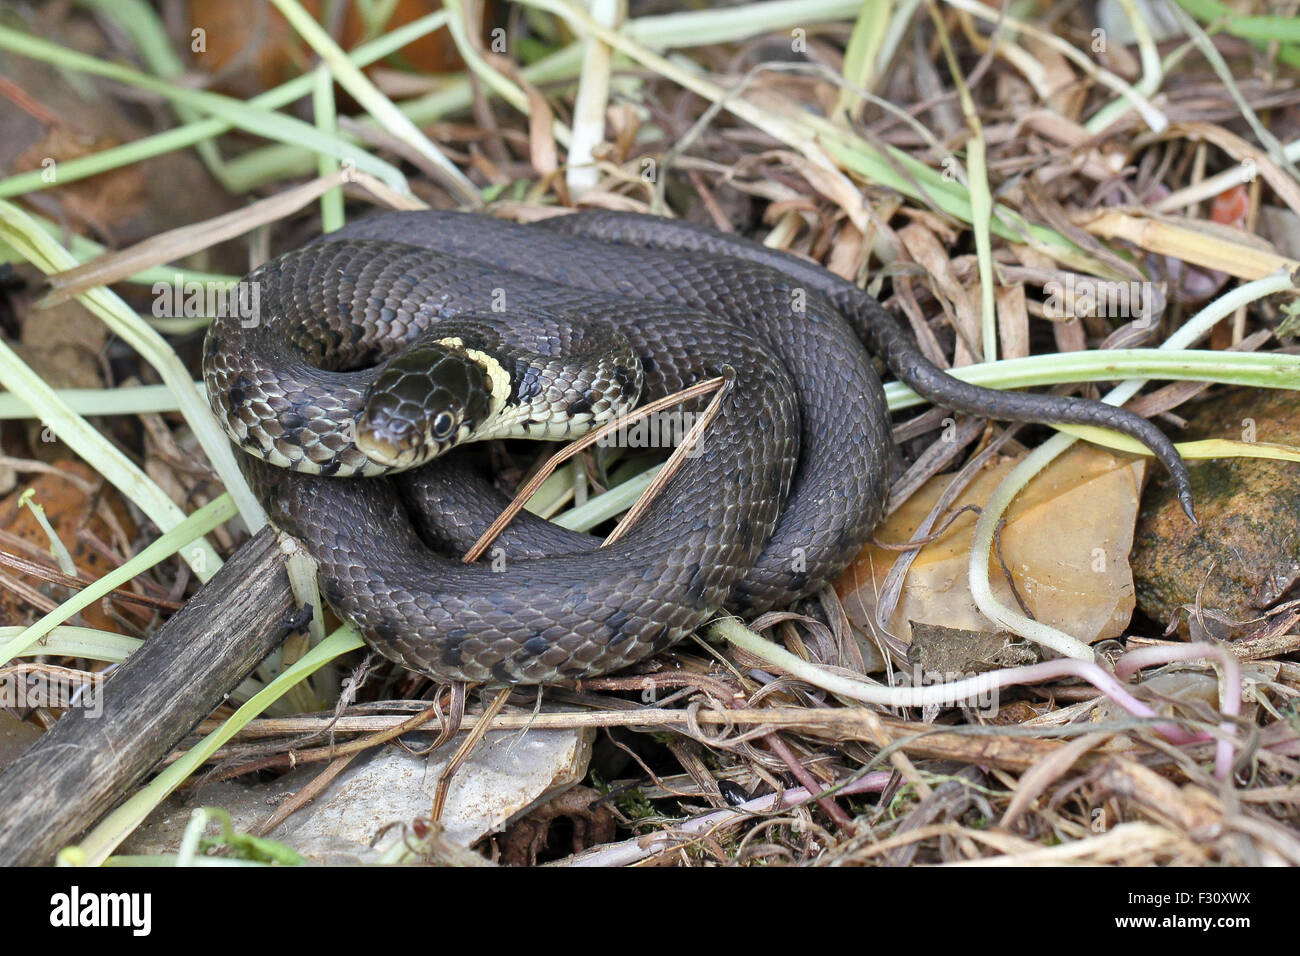 Close-up photo of a British grass snake. Stock Photo